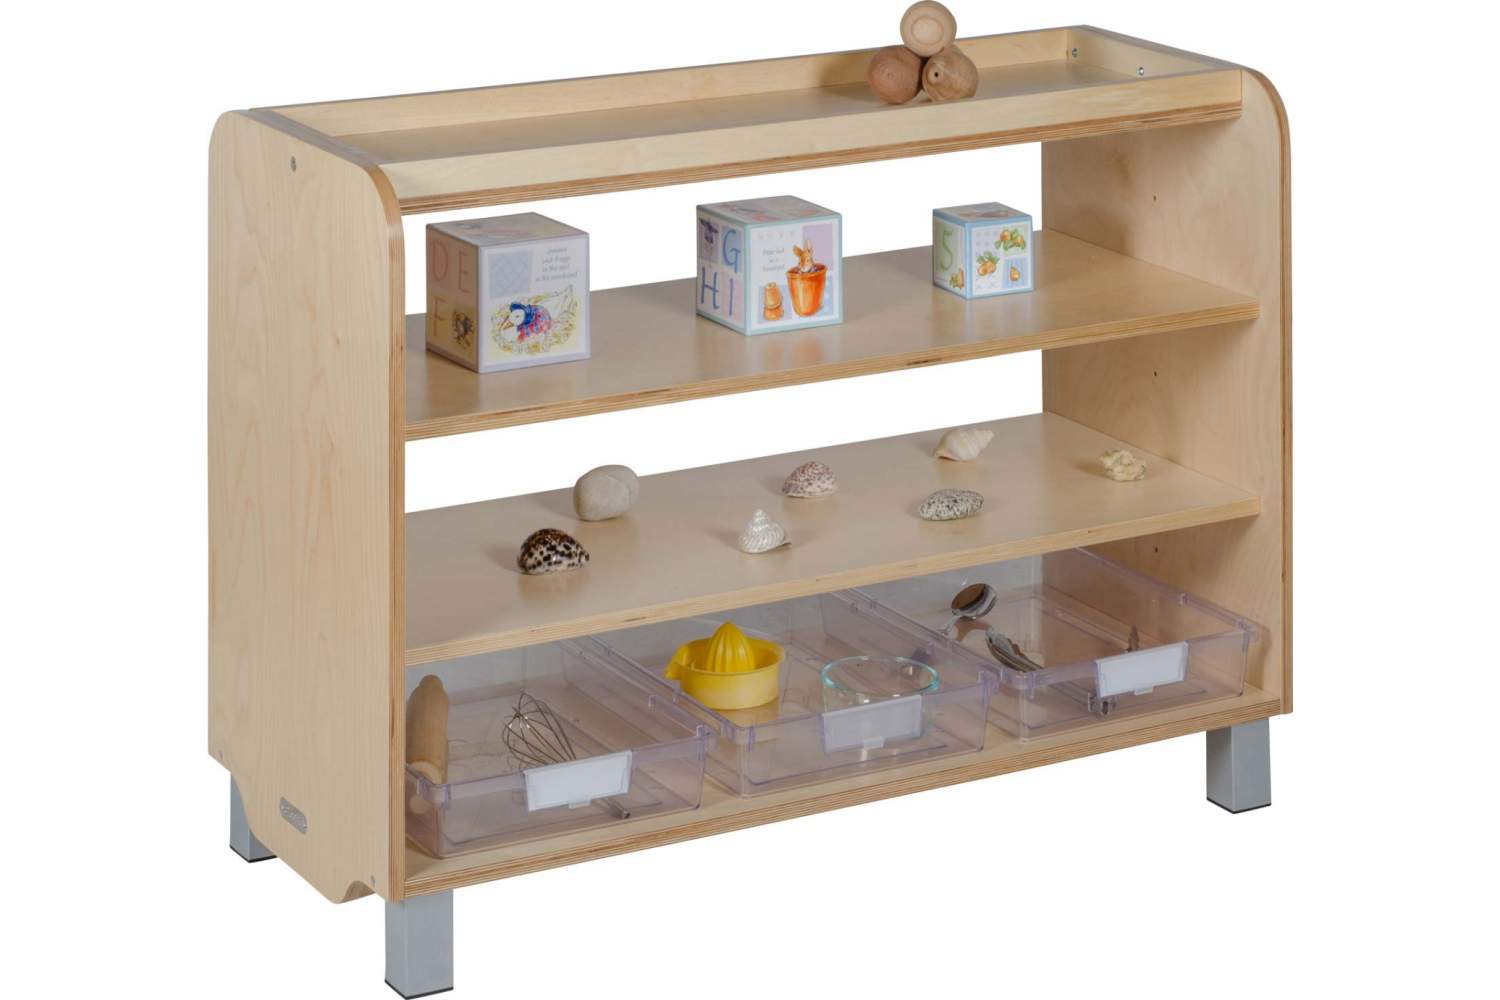 Storage unit for preschools